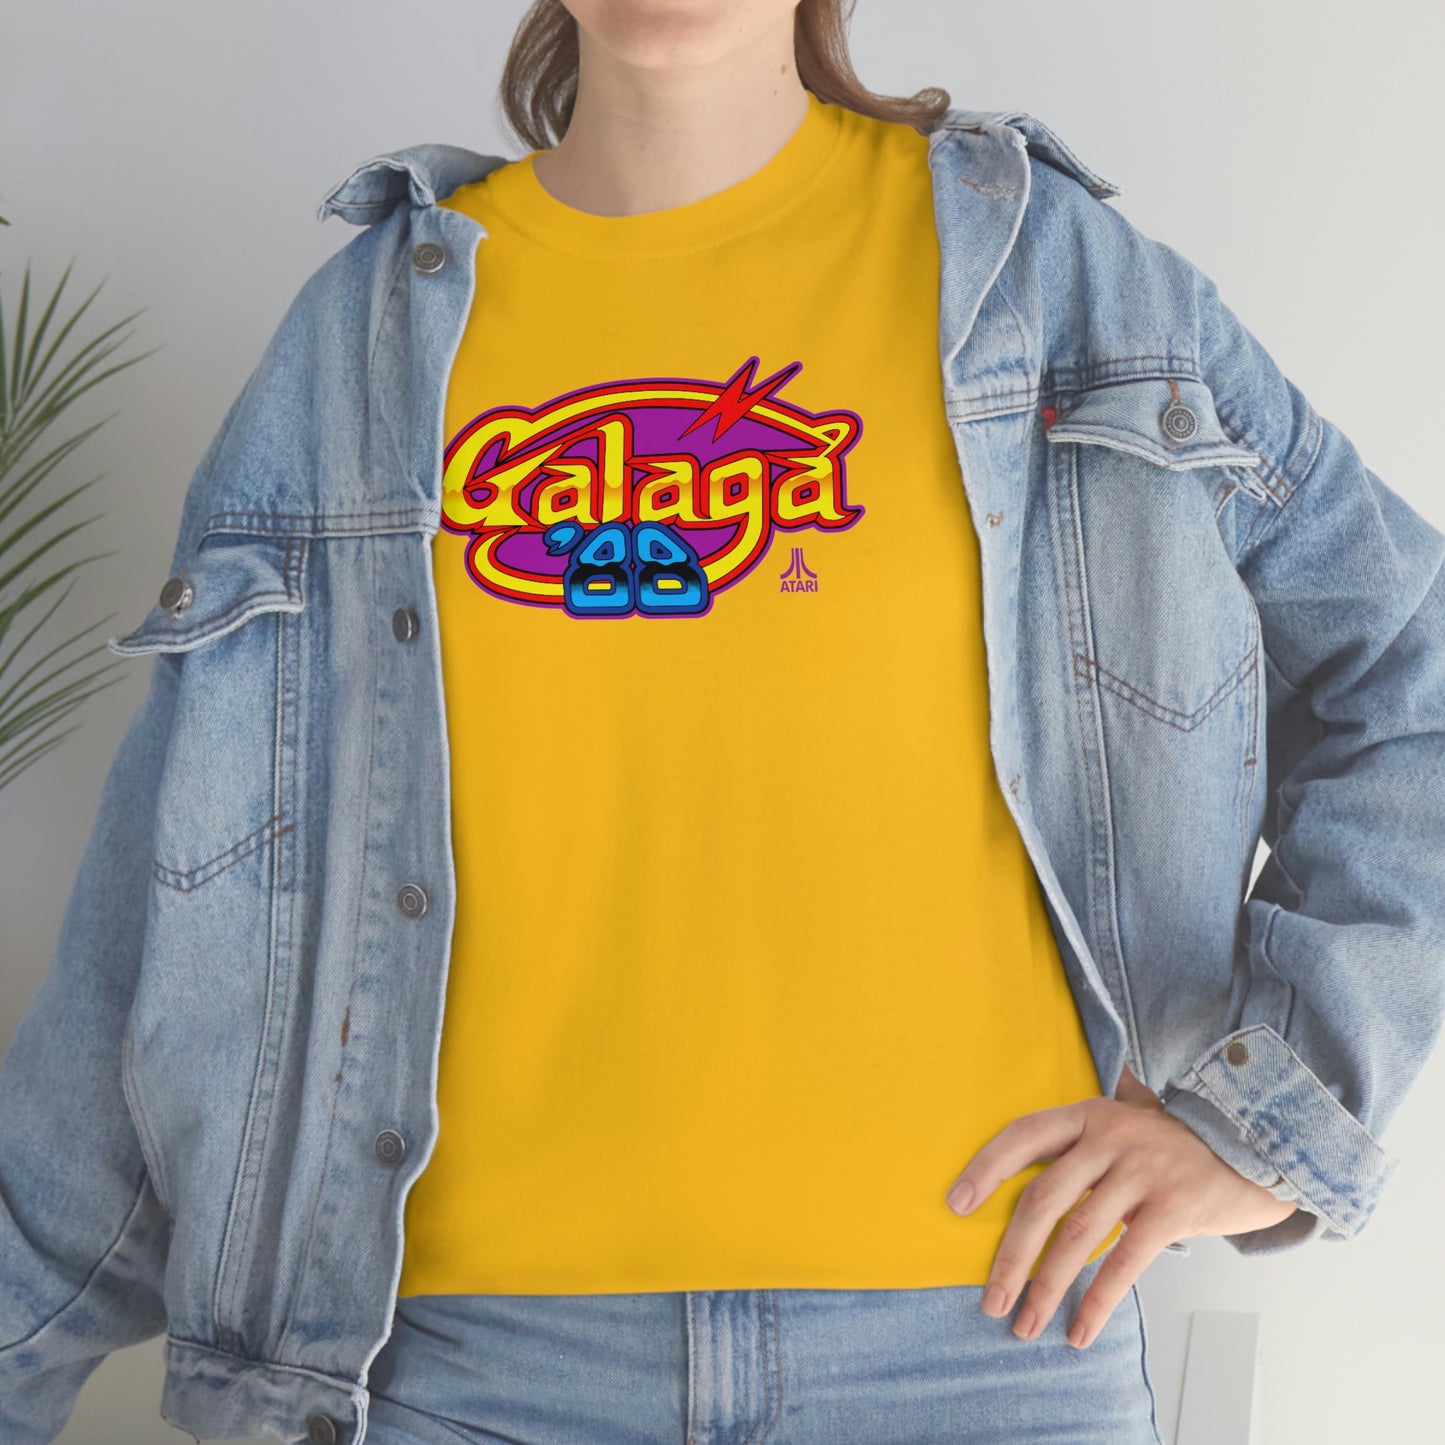 Galaga 88